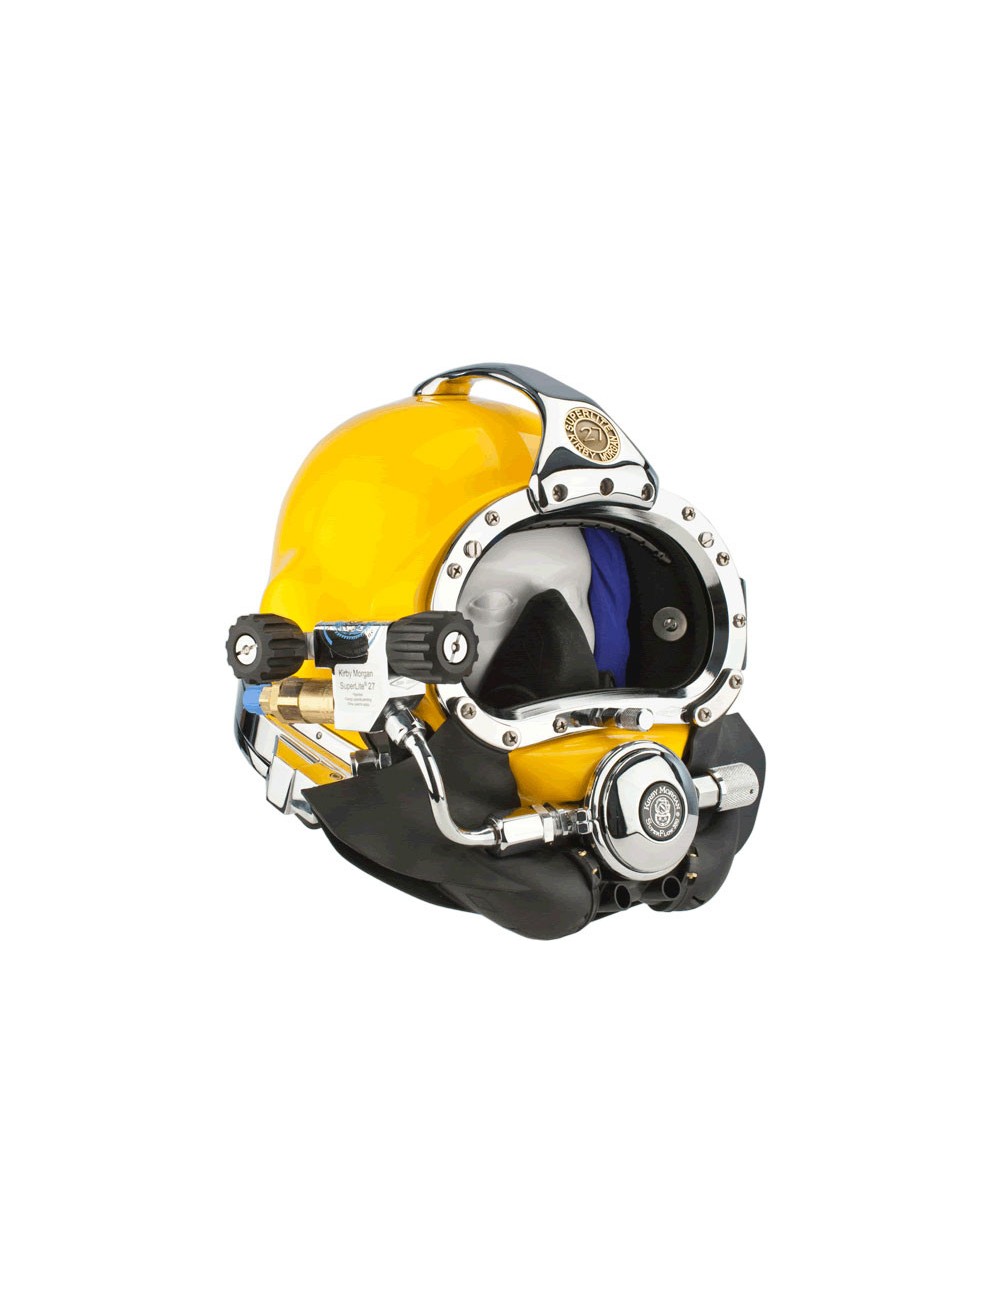 Kirby Morgan Superlite 27 Commercial Diving Helmet